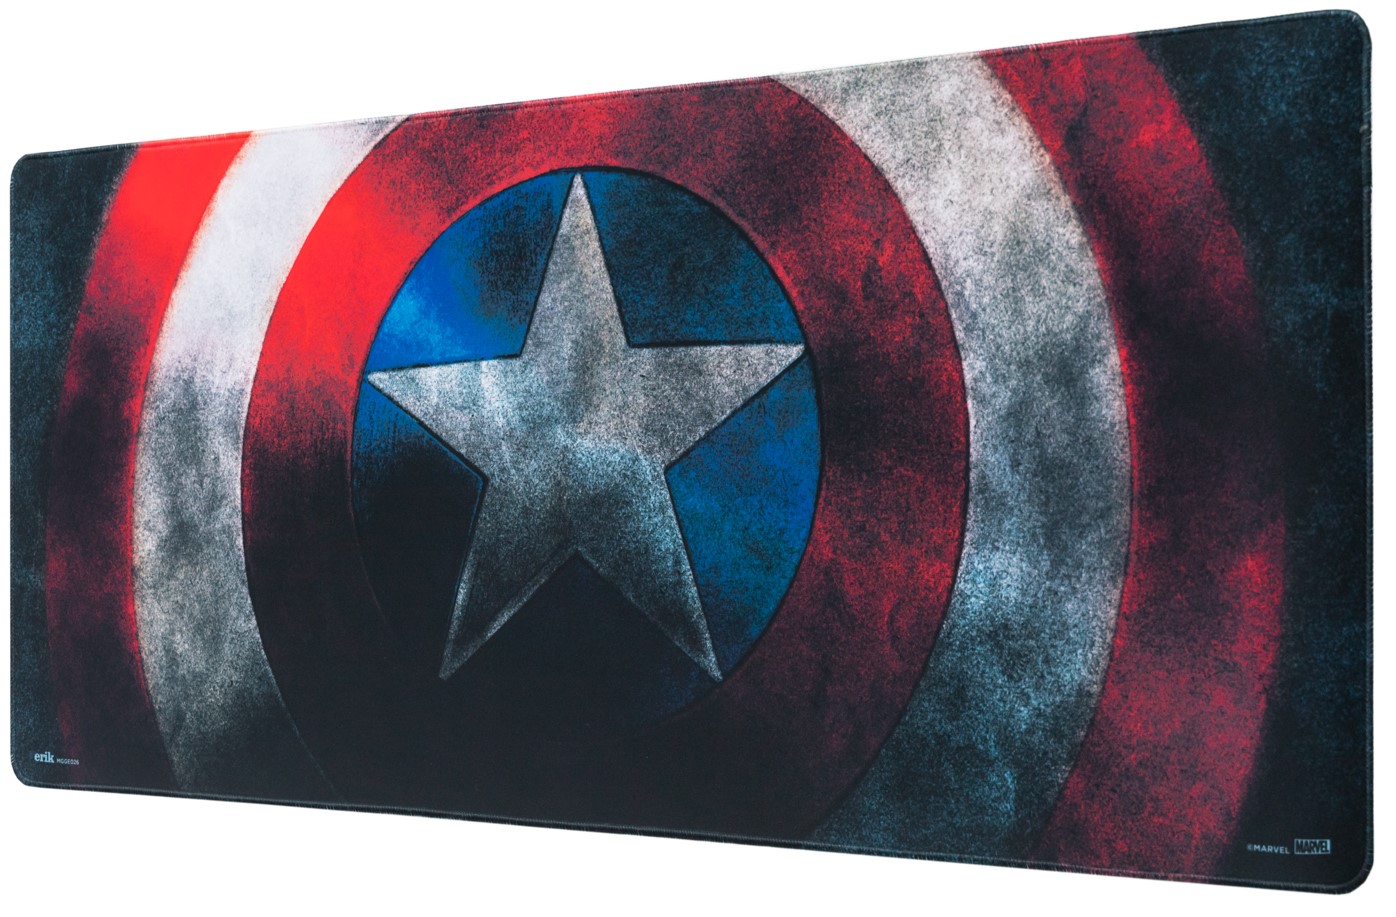 Гейминг подложка за мишка Erik - Captain America, XL, мека, многоцветна